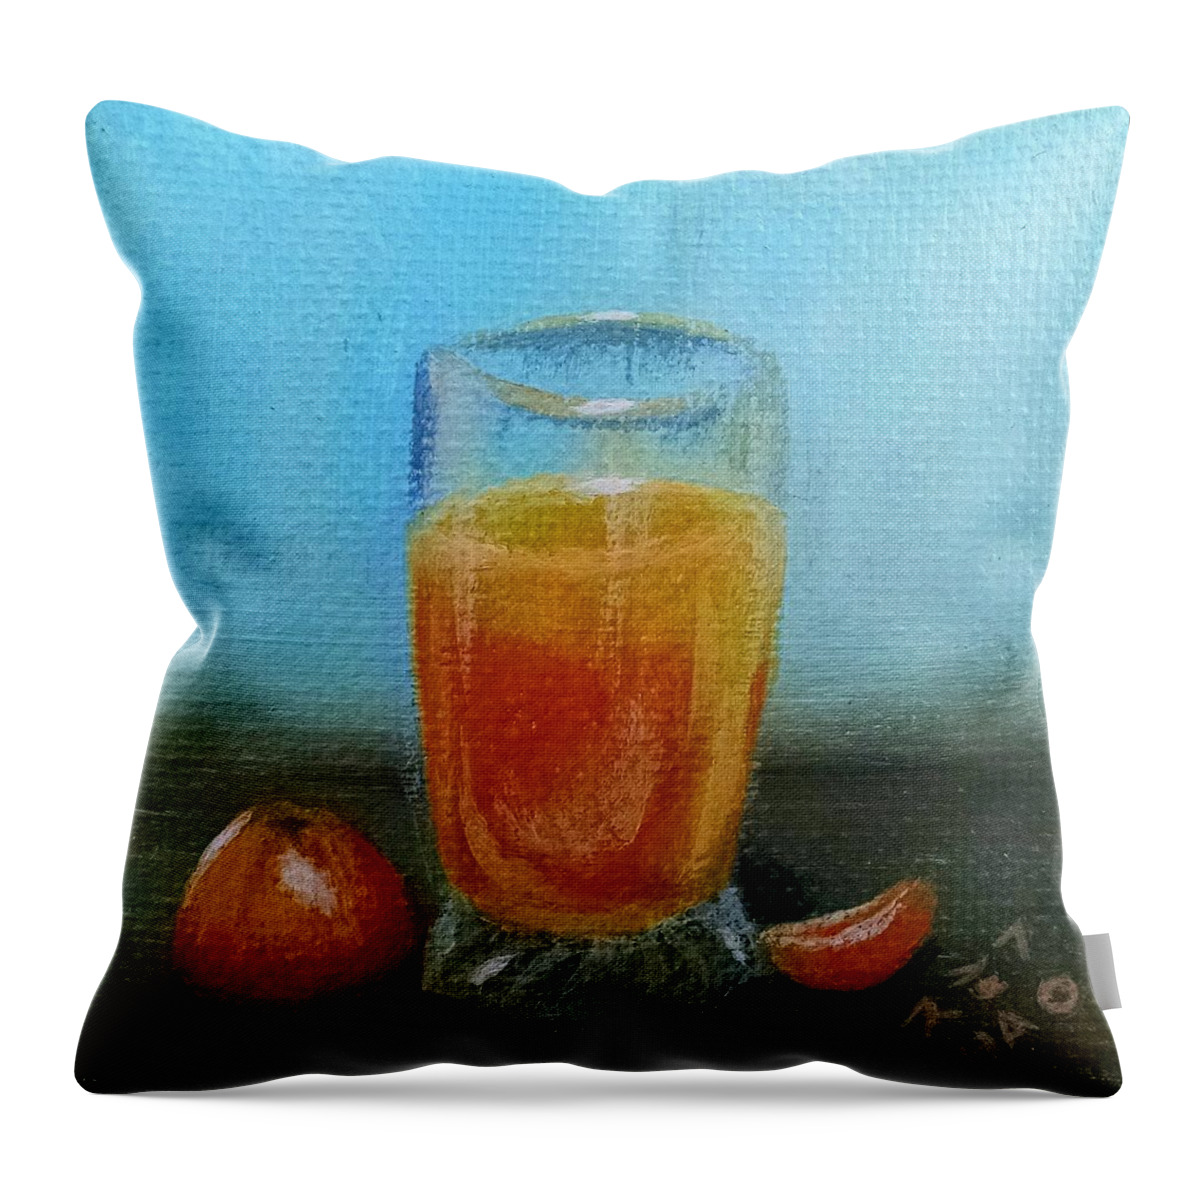 Orange Juice Throw Pillow featuring the painting Orange Juice by Helian Cornwell